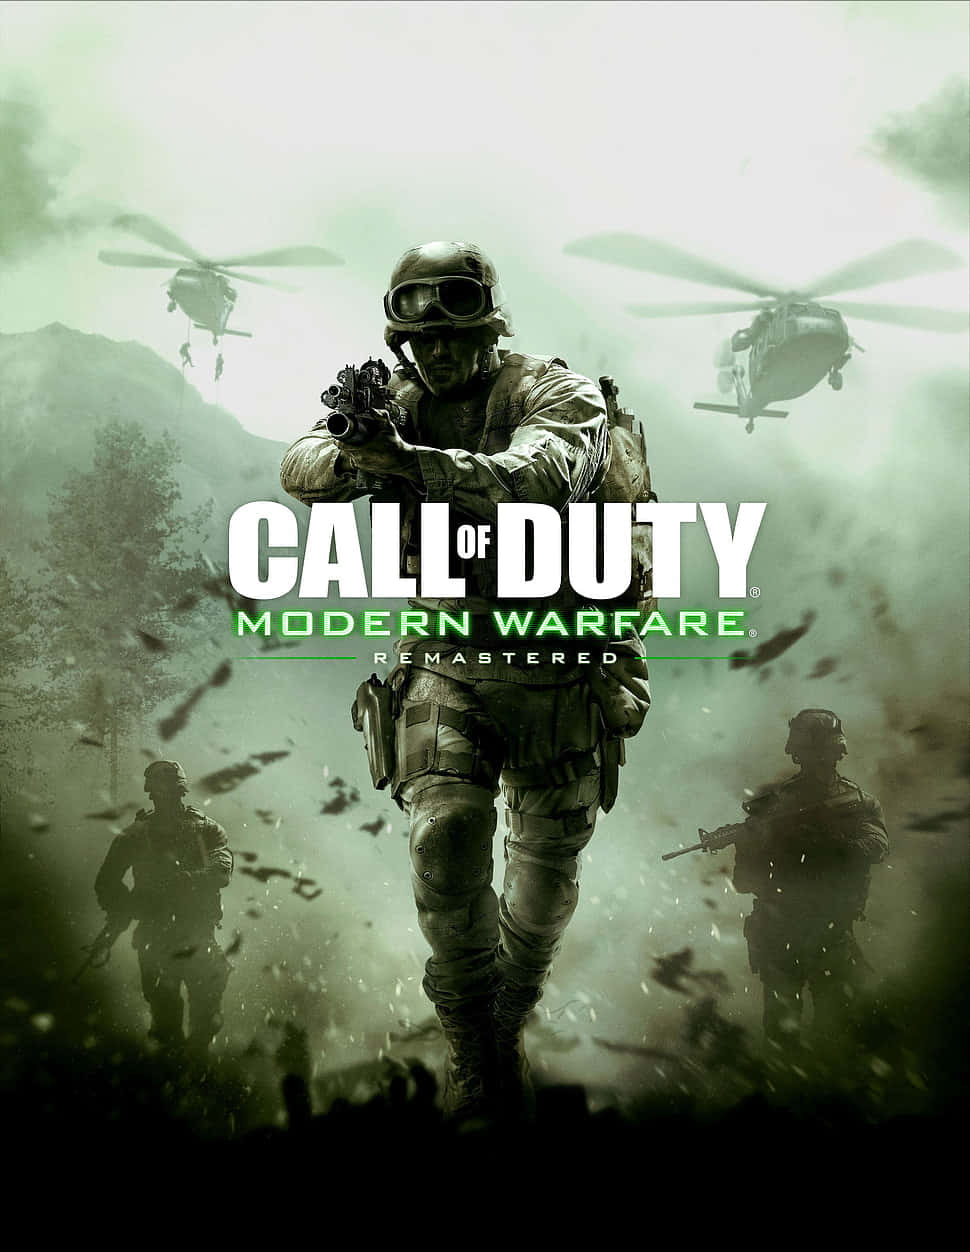 Take on Modern Warfare with Call of Duty Wallpaper